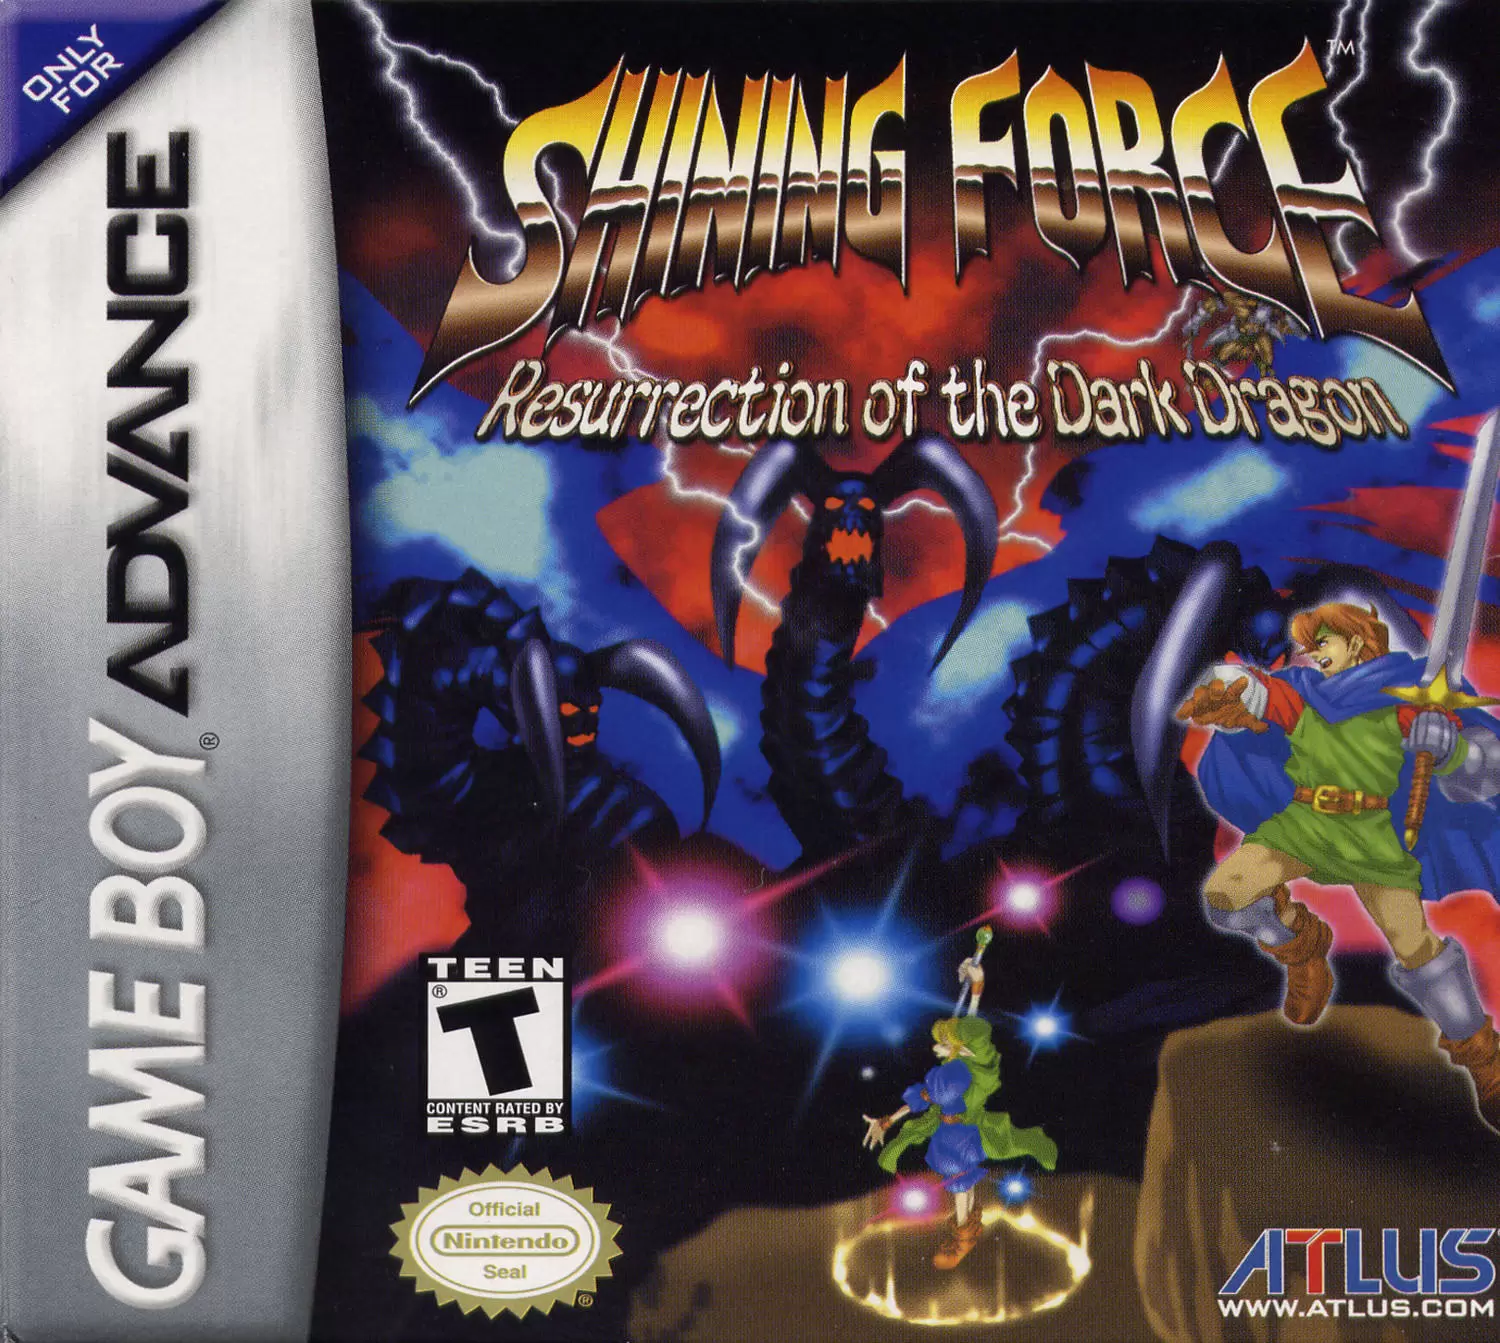 Game Boy Advance Games - Shining Force: Resurrection of the Dark Dragon